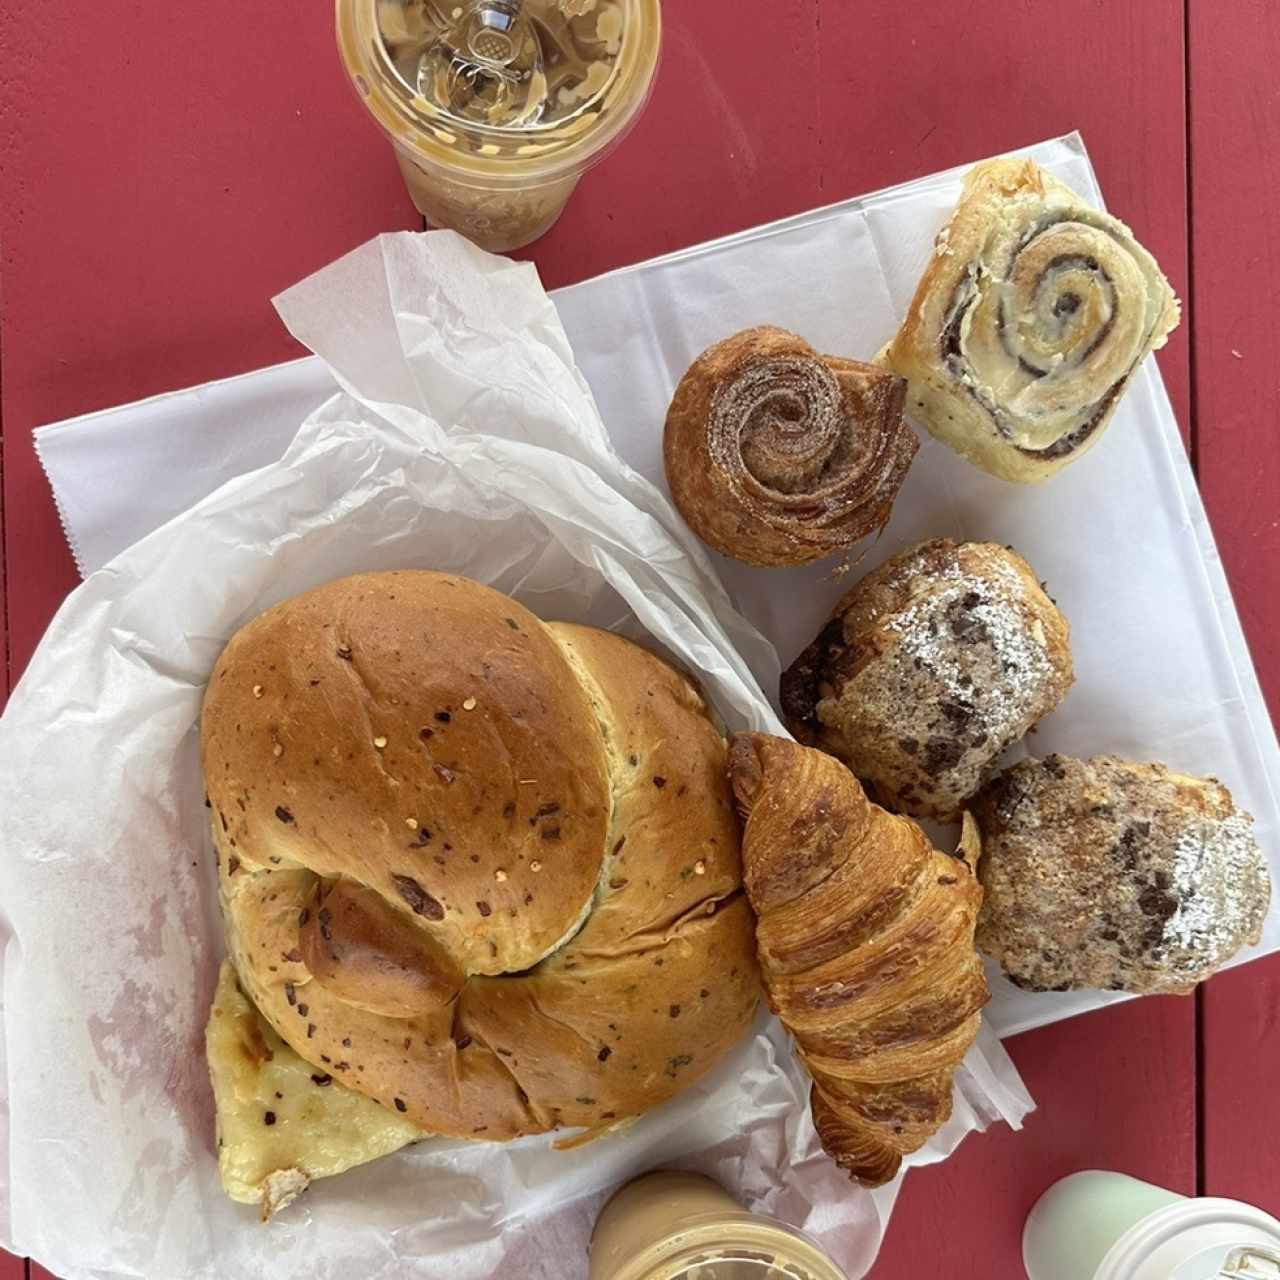 Cheesy bread, croissant de chocolate, breakfast pastry, cinnamon roll